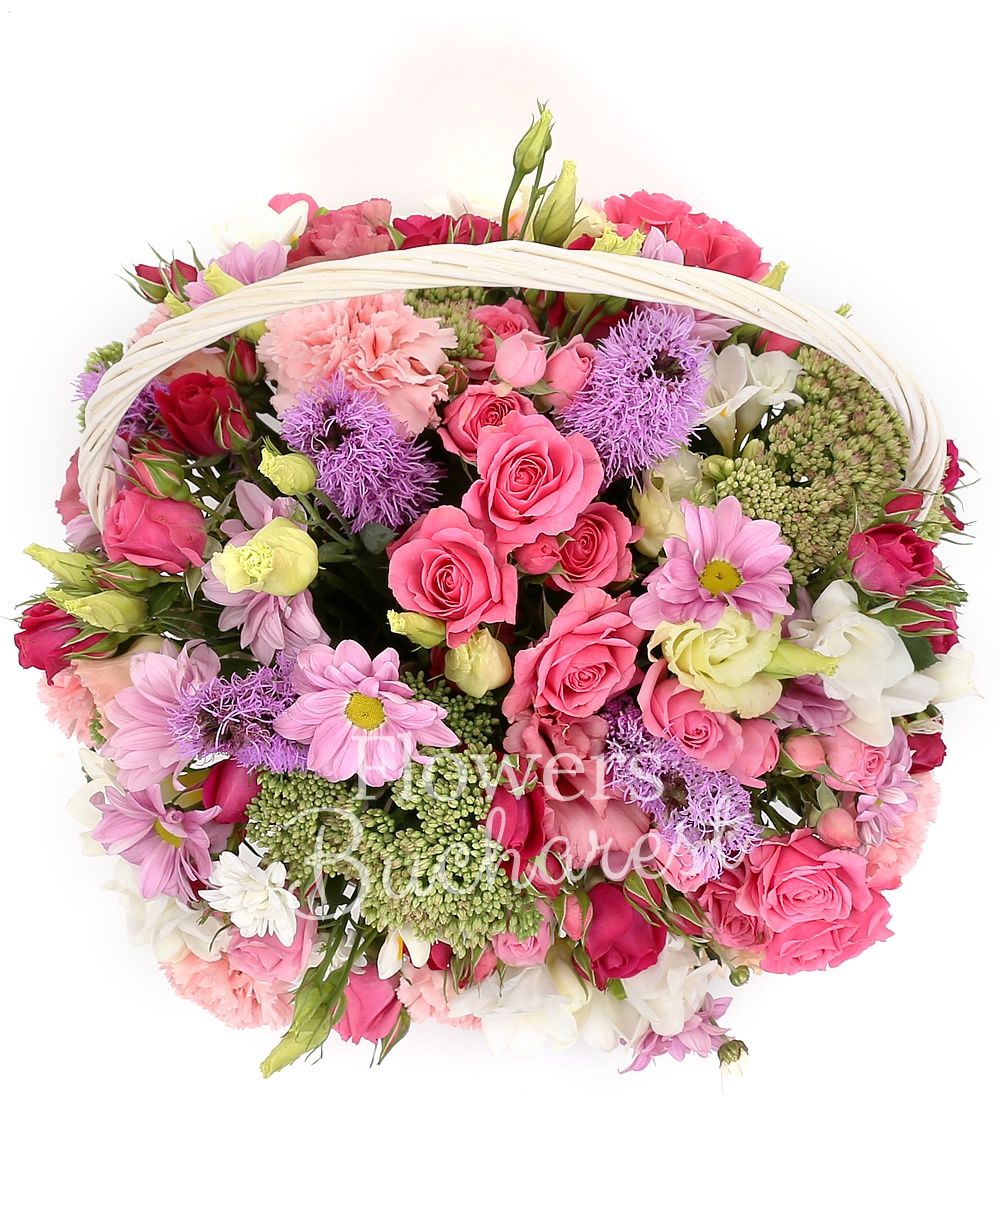 10 pink miniroses, 5 mauve liatris, 7 pink carnations, 3 sedum, 2 chrysanthemums, 10 white freesias, 3 pink lisianthus, basket